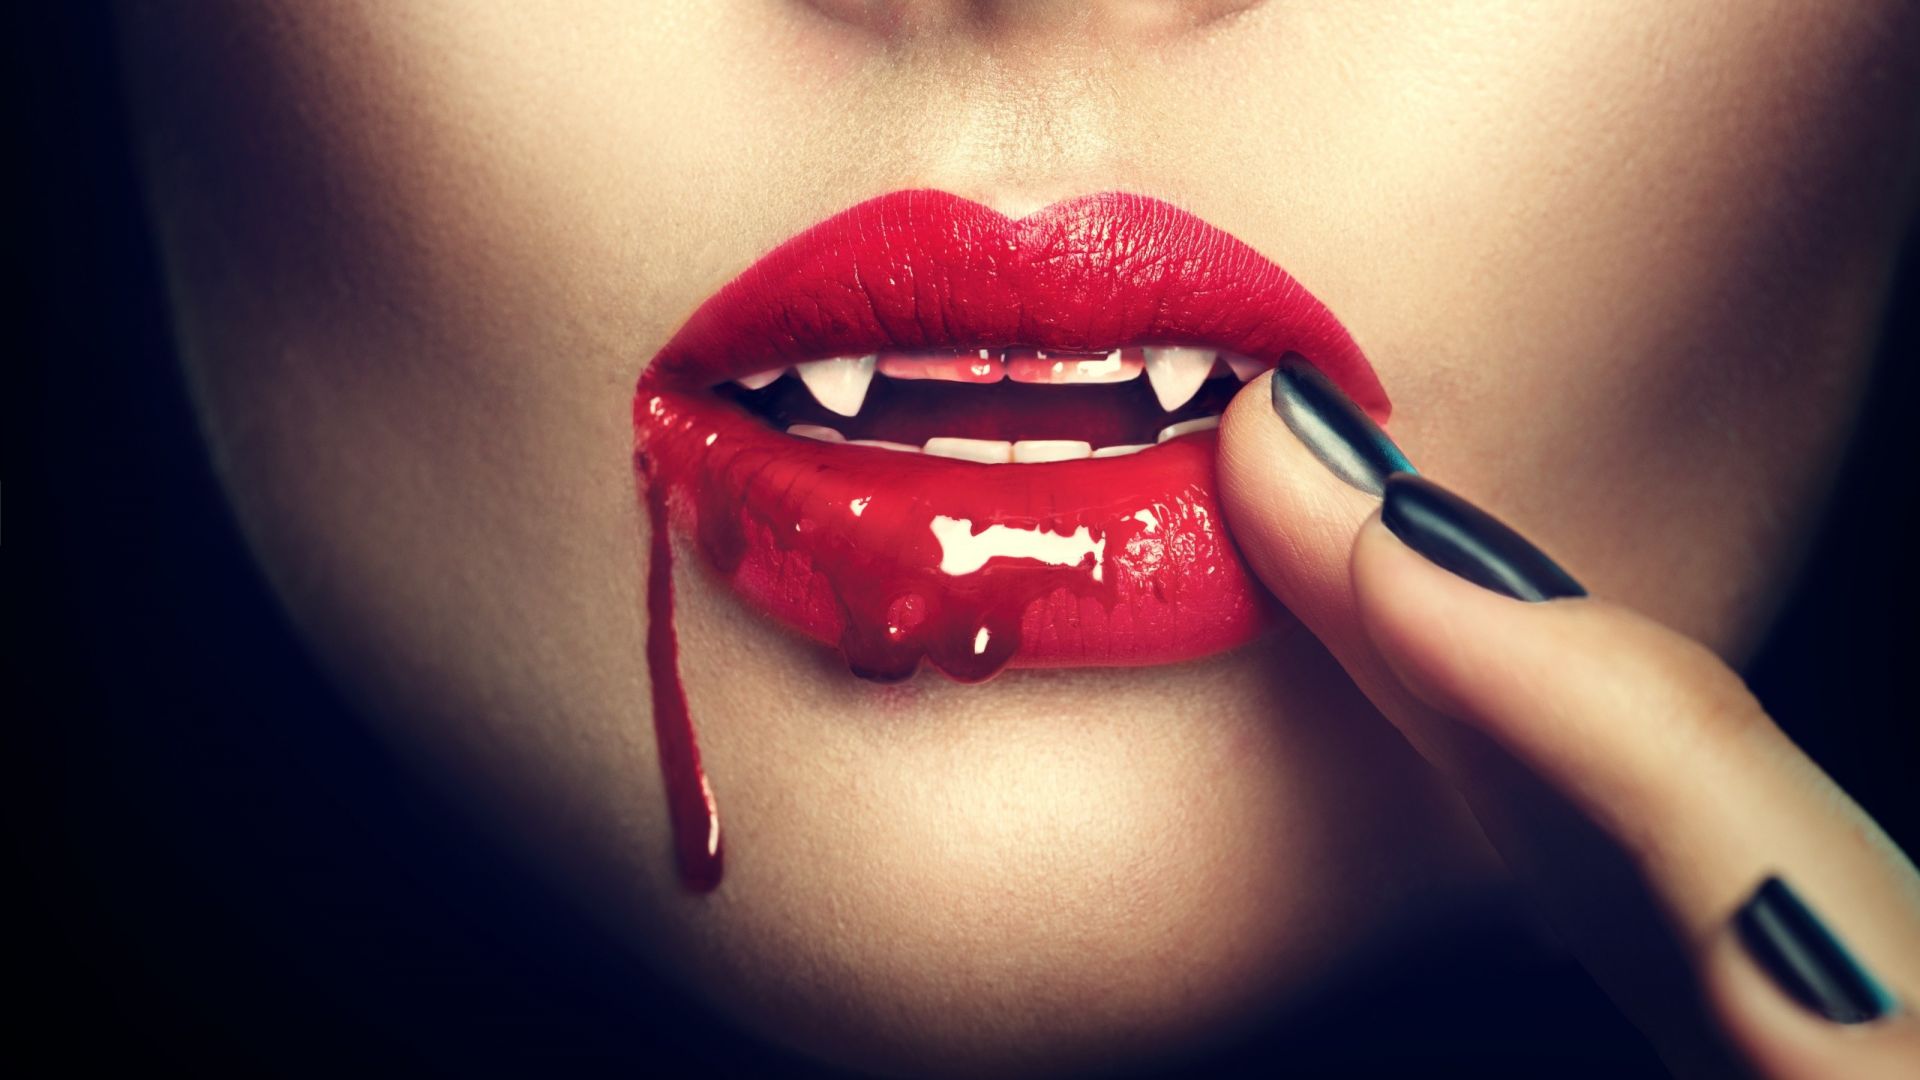 Wallpaper Vampire's lips